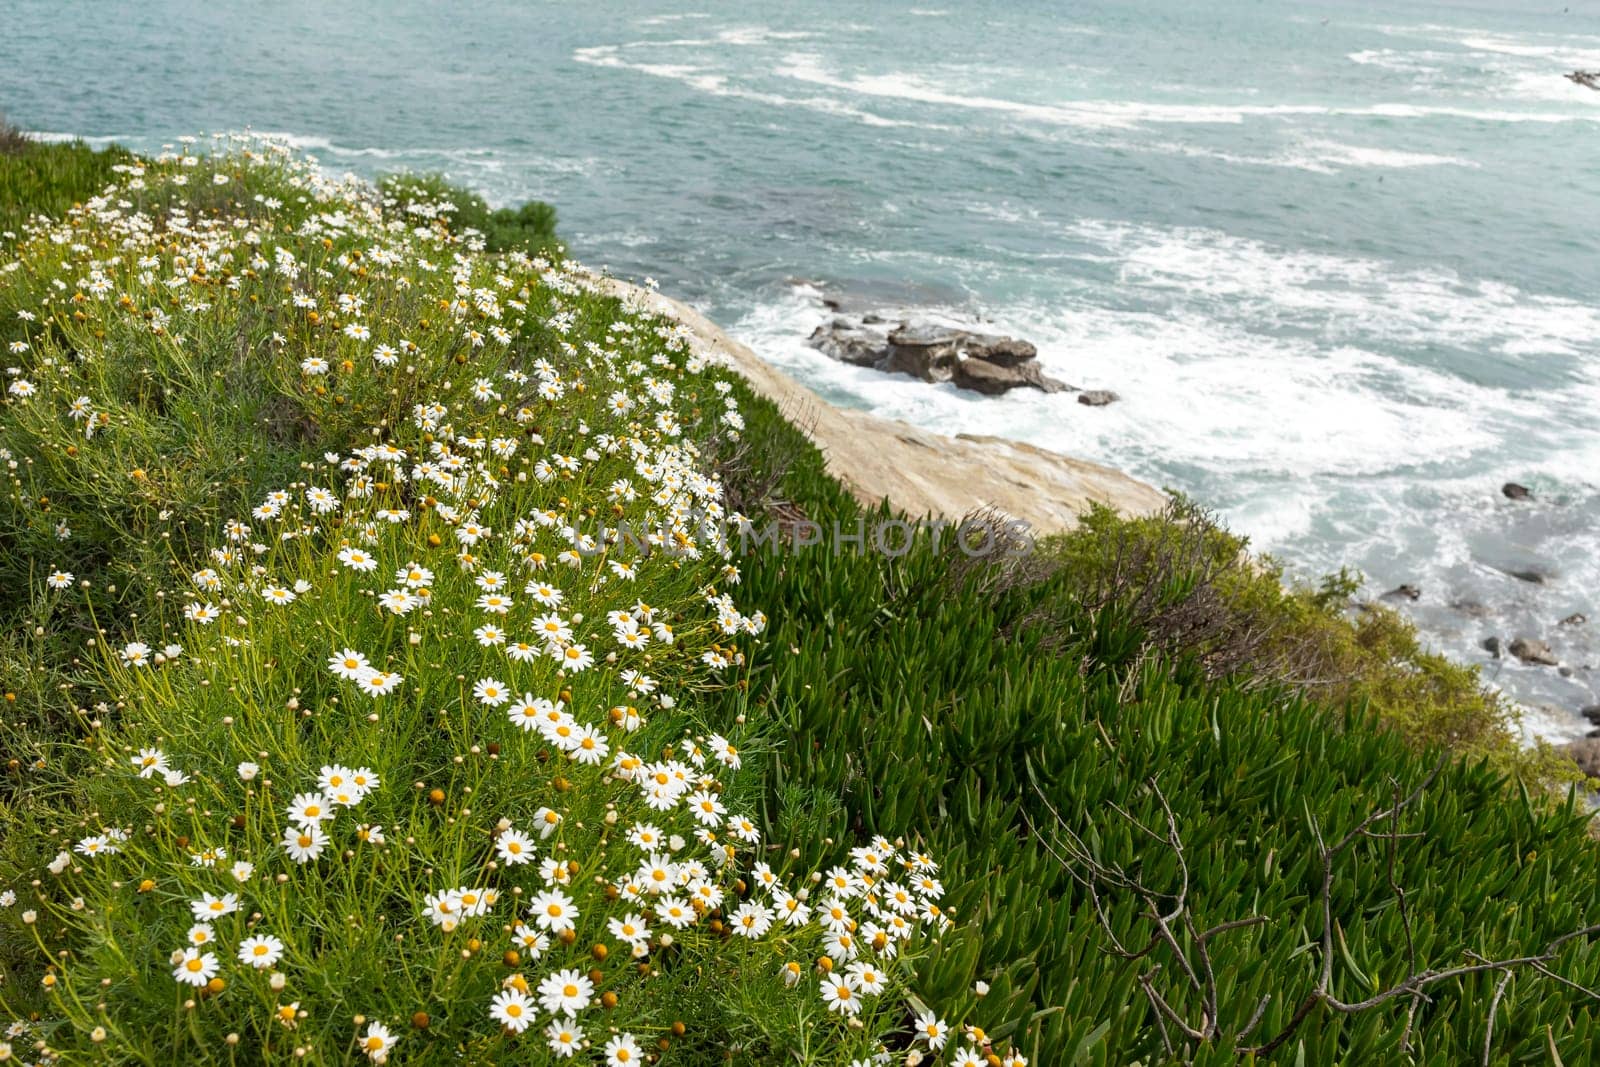 Coronado Beach. Sea or Ocean Waves along Green Grass with White Blooming Mayweed Flowers on Pacific coast line in San Diego, USA, California. Wallpaper, Scenic Backdrop. Horizontal by netatsi